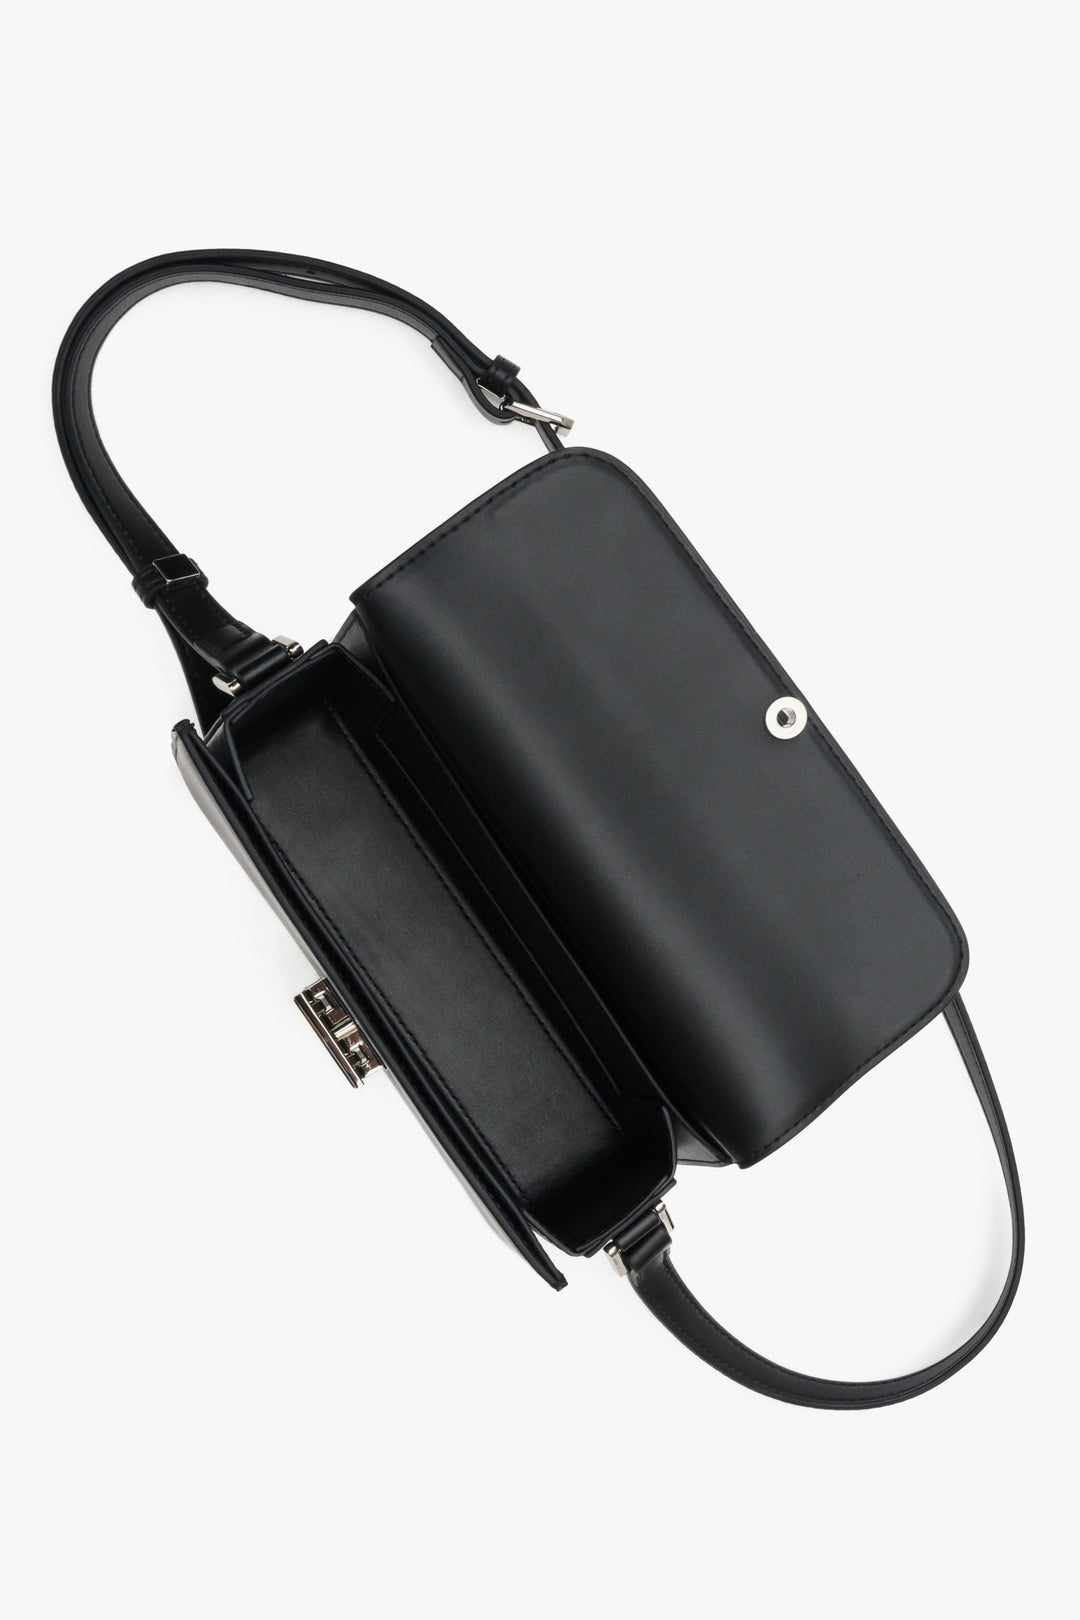 Women's small black leather handbag Estro - interior of the model.